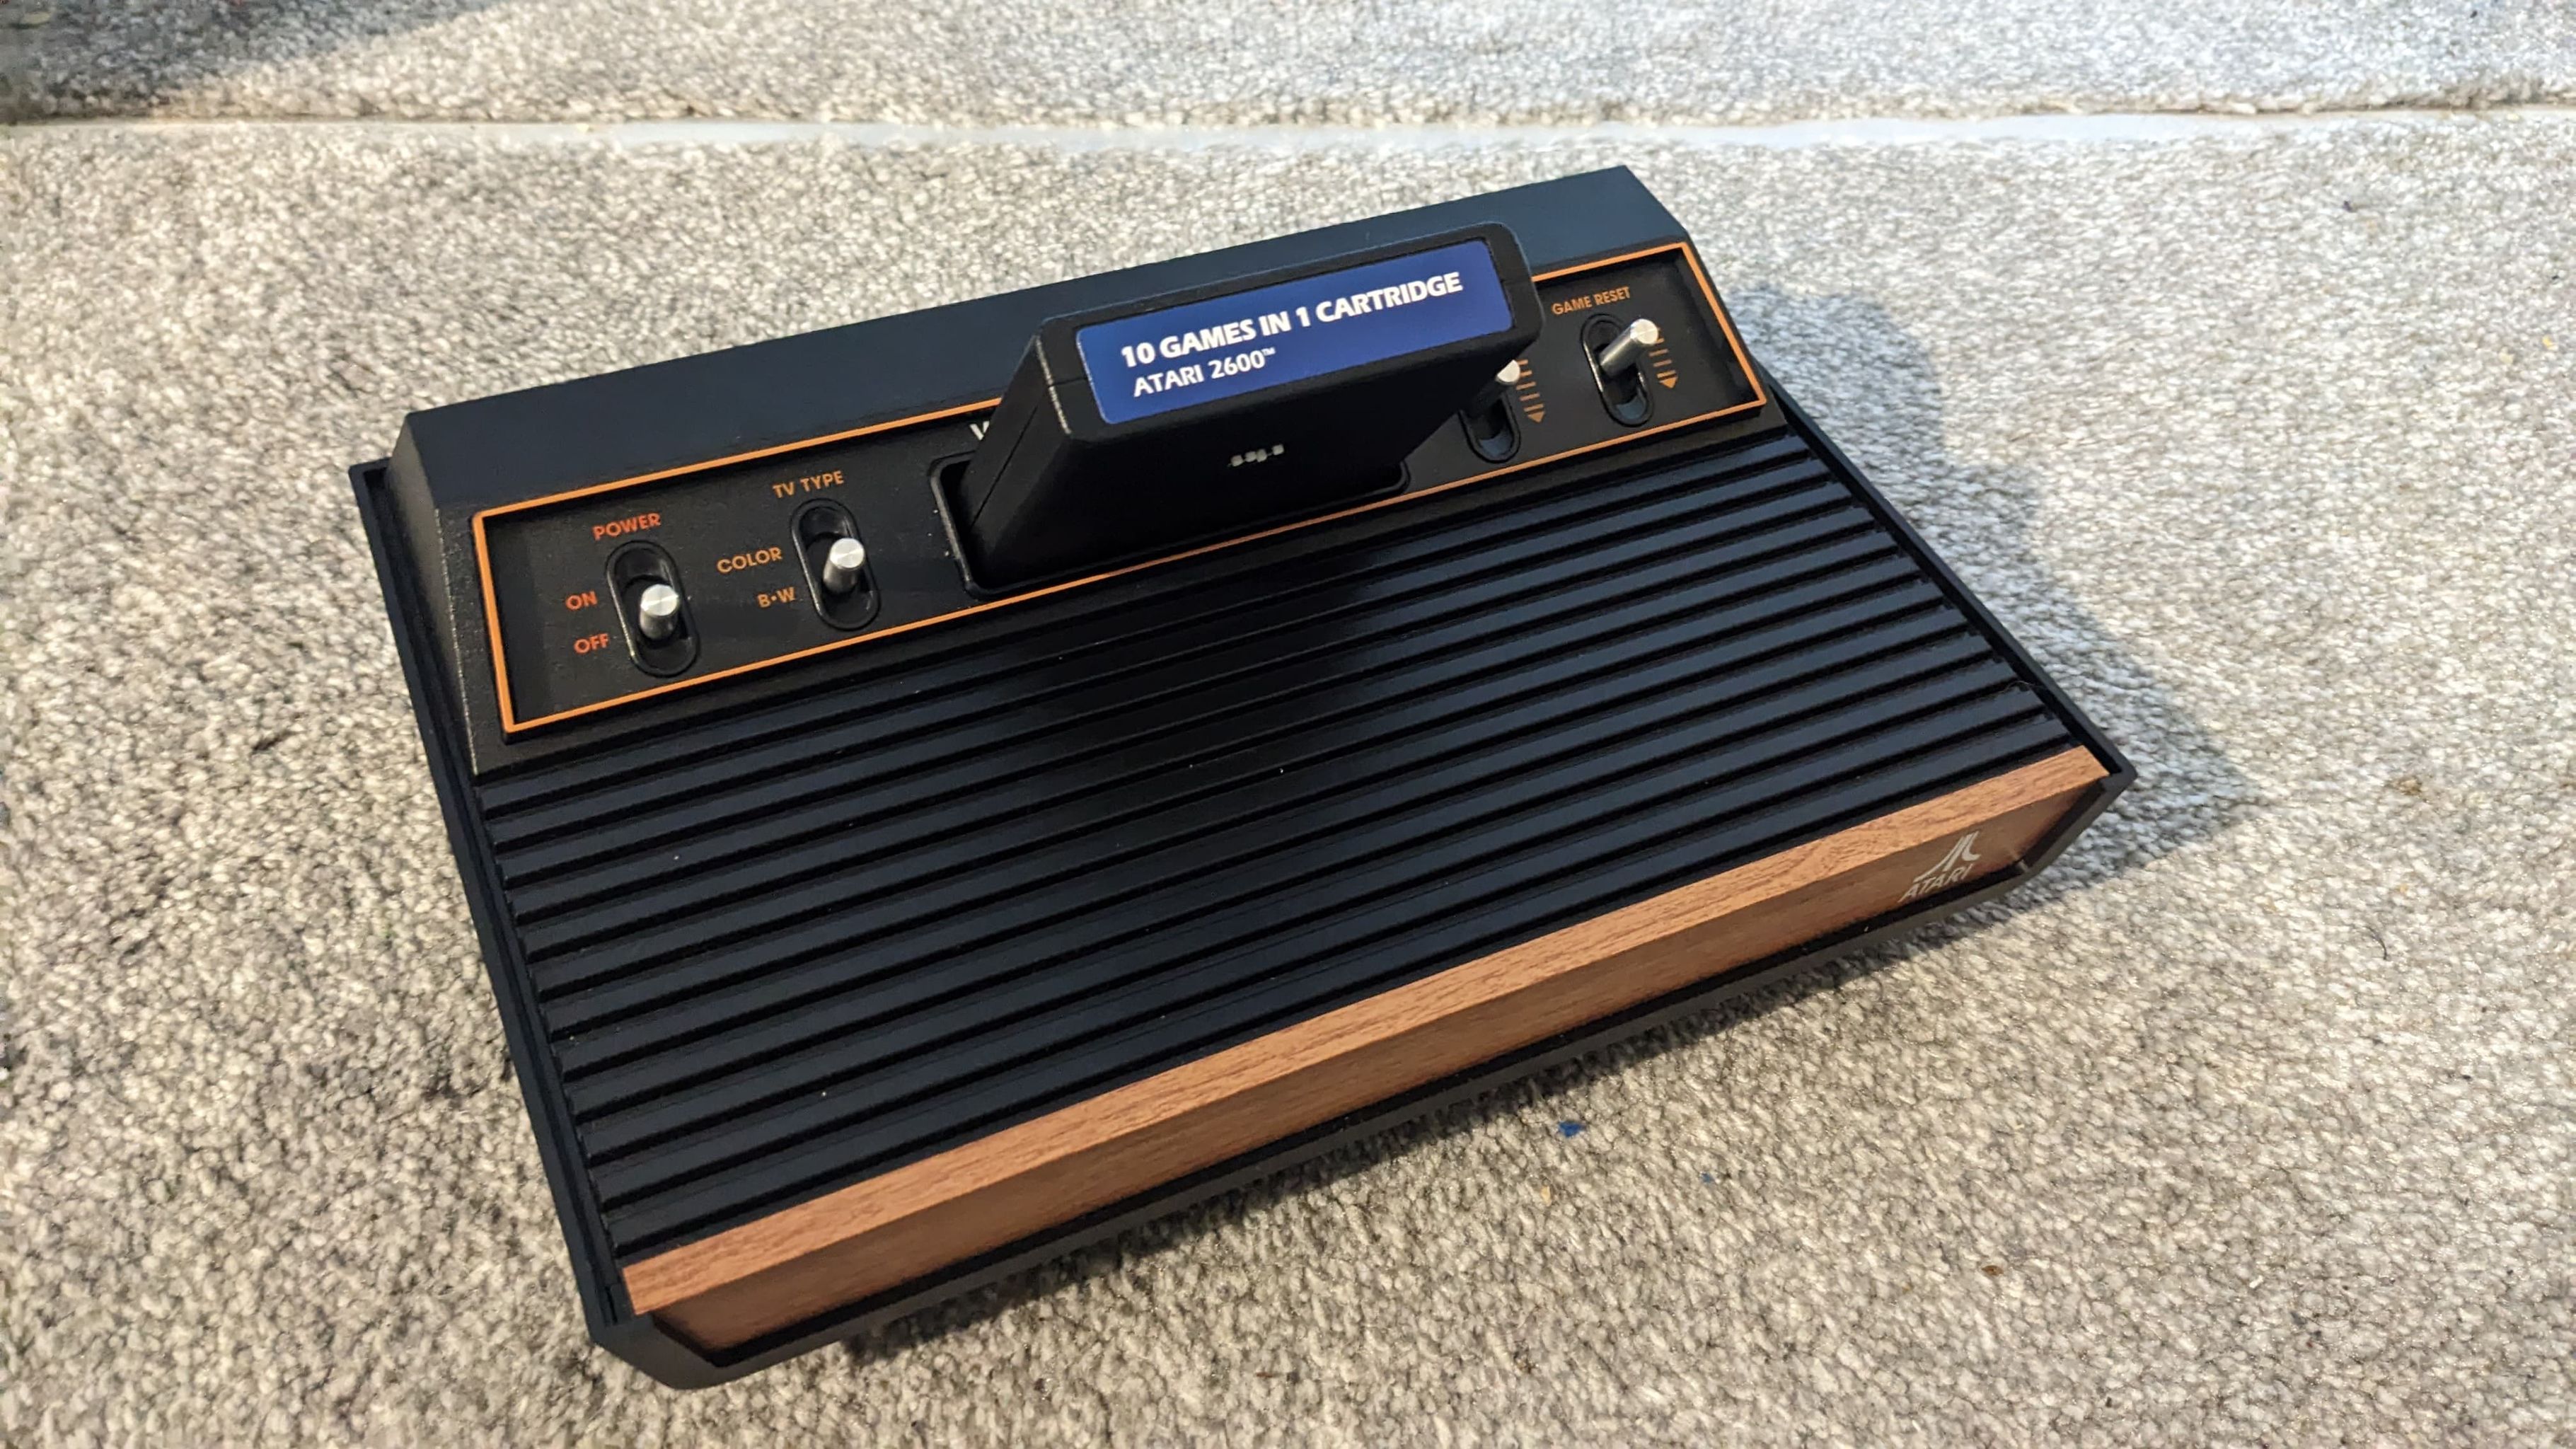 Console Atari 2600 em Oferta